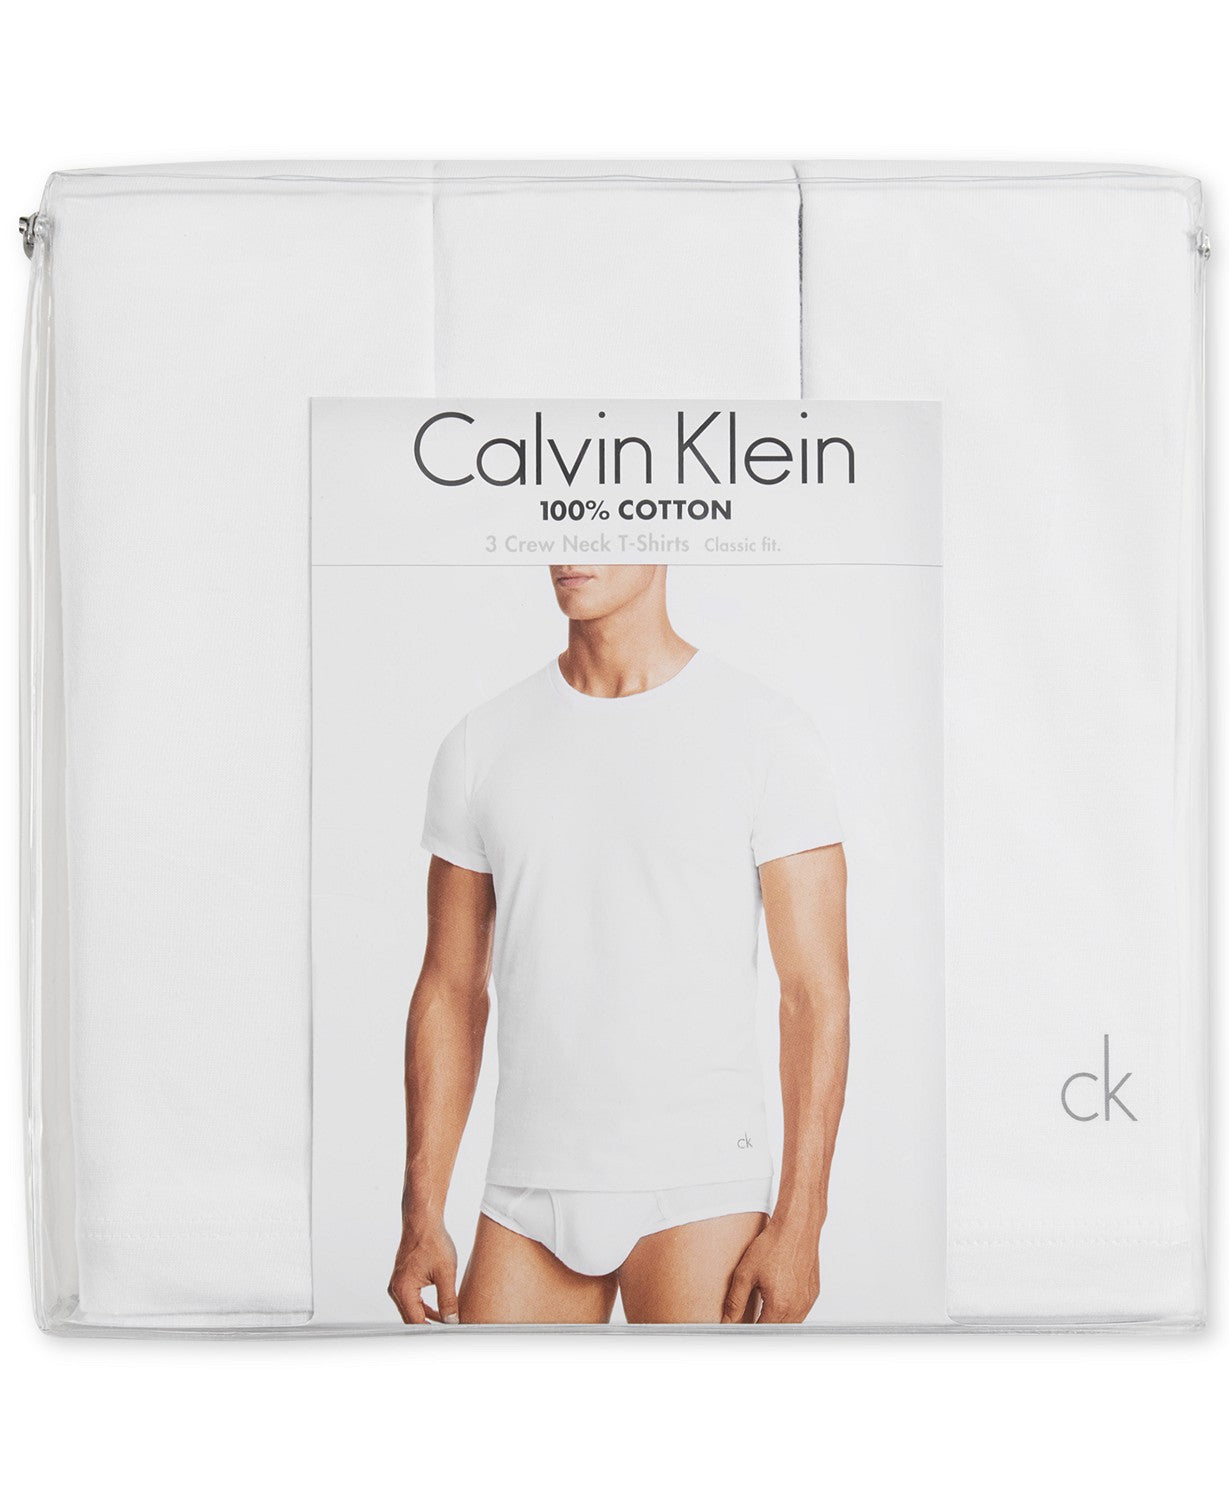 Verspreiding Kosten rivaal Men's Calvin Klein | Three Crew Neck T-Shirts | White - F.L. CROOKS.COM